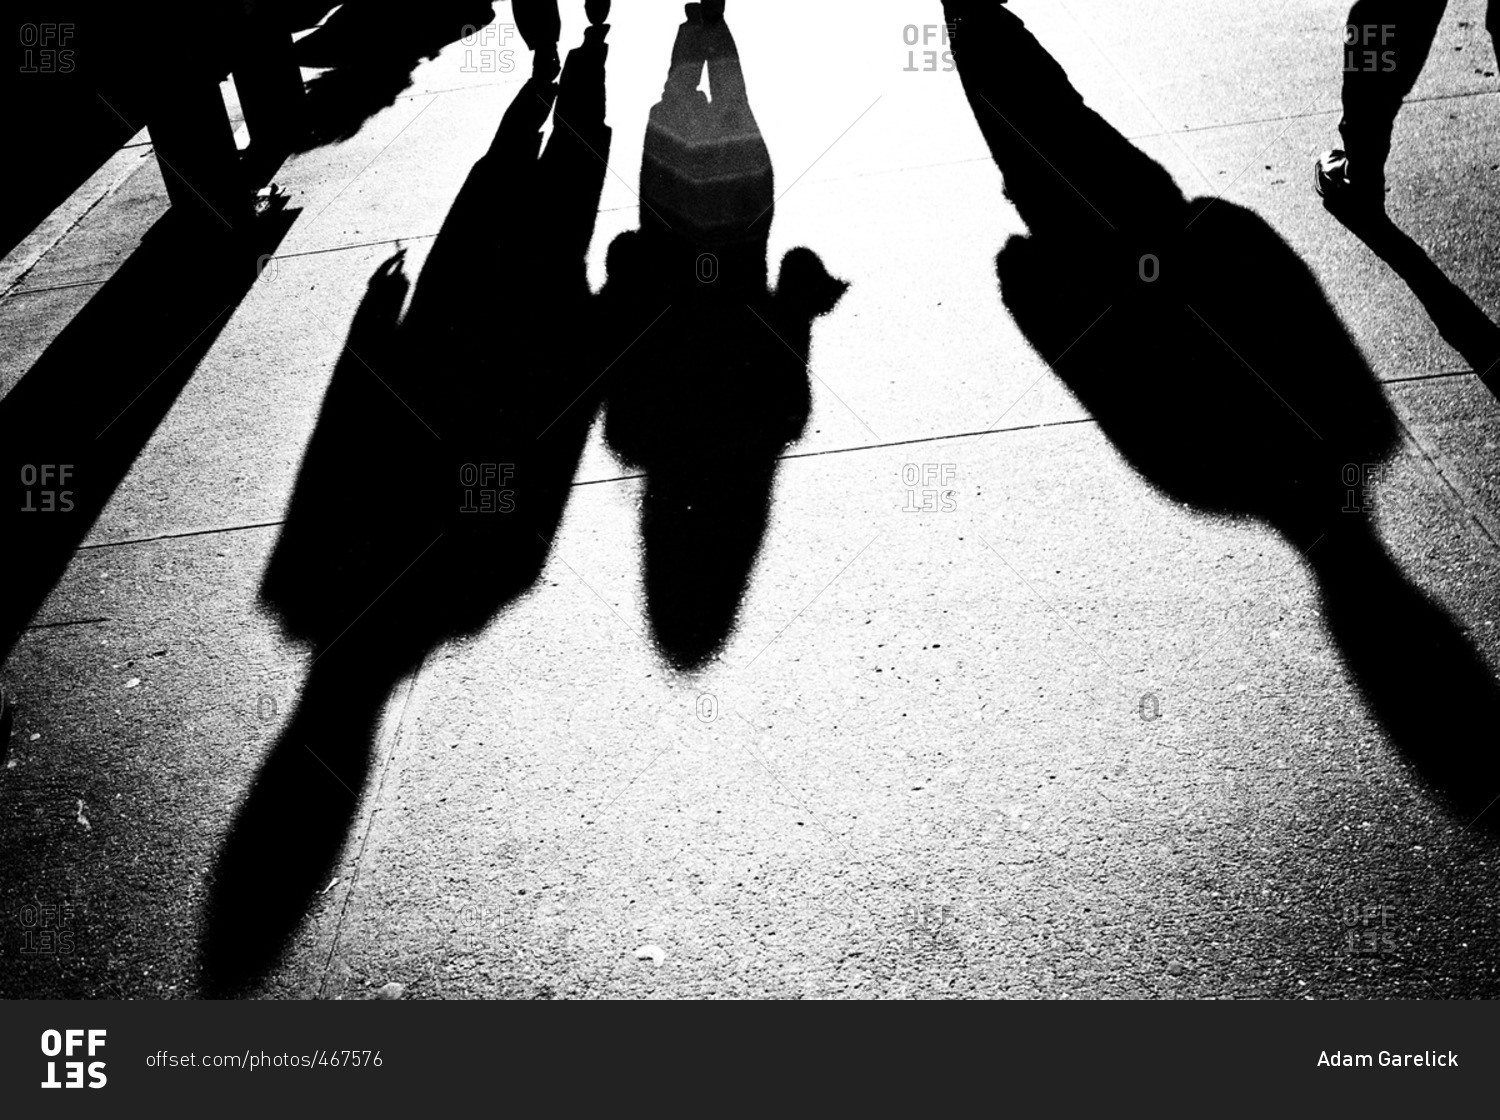 Shadows of people on city sidewalk